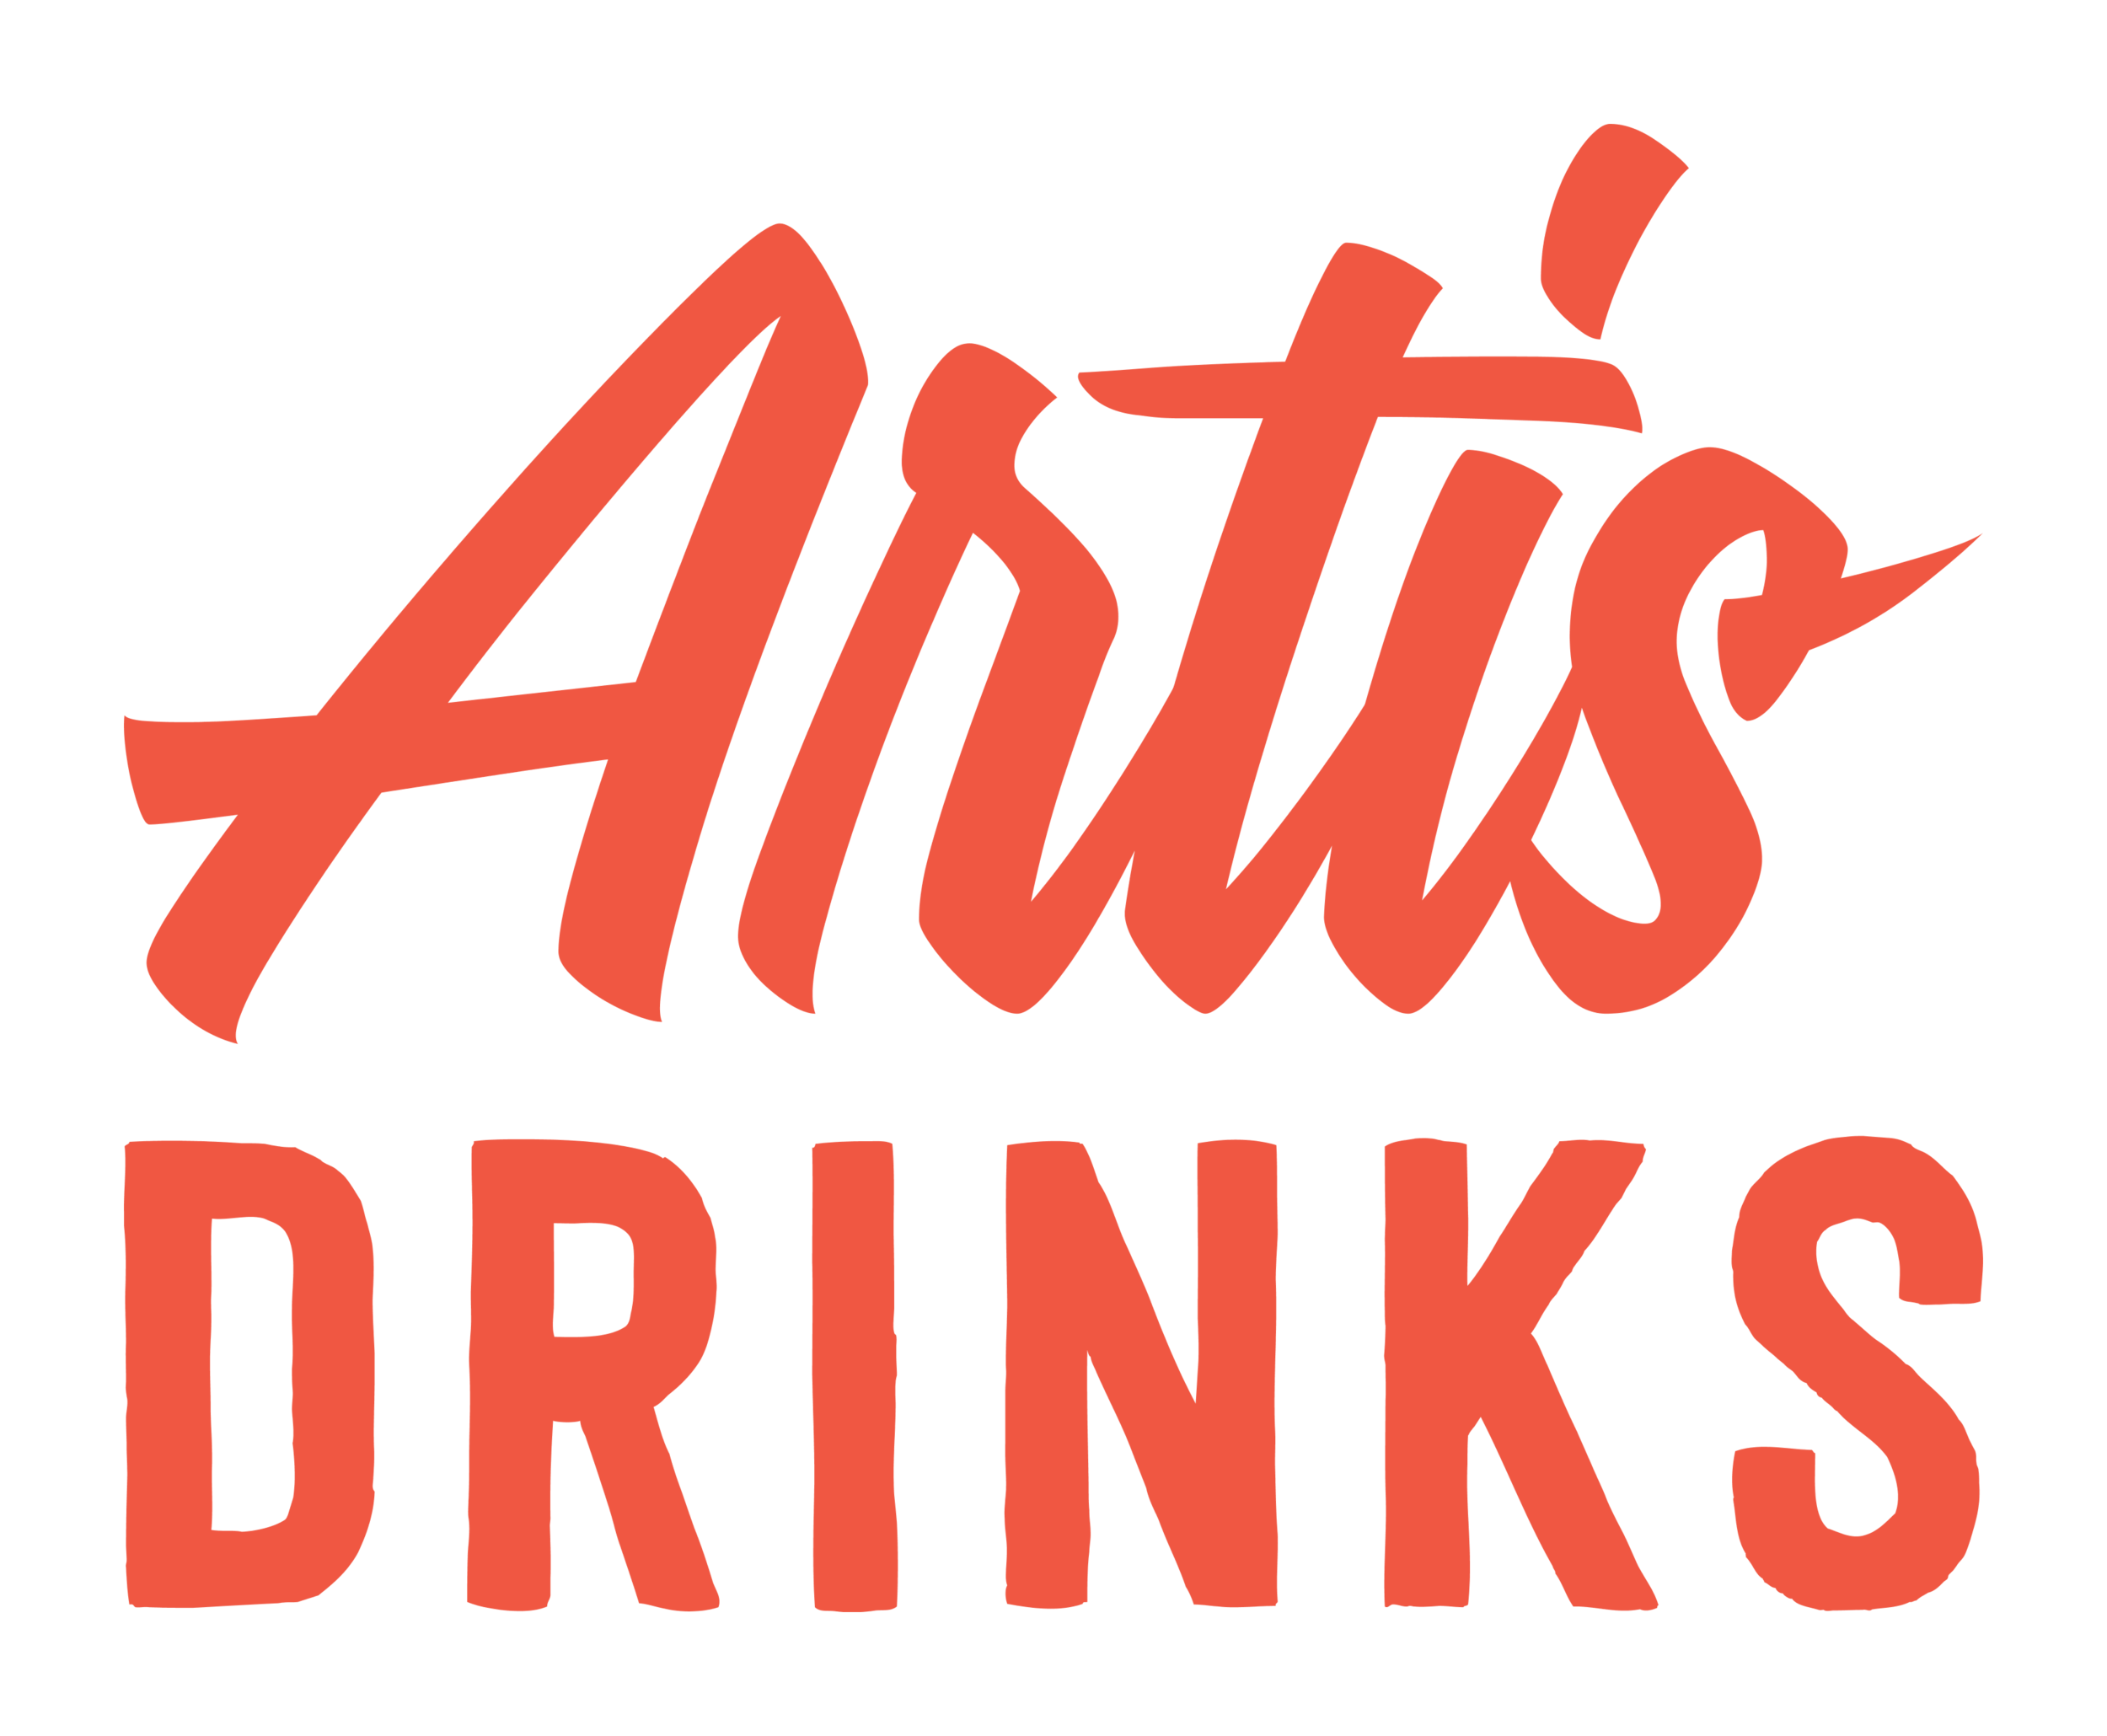 Artis Drinks